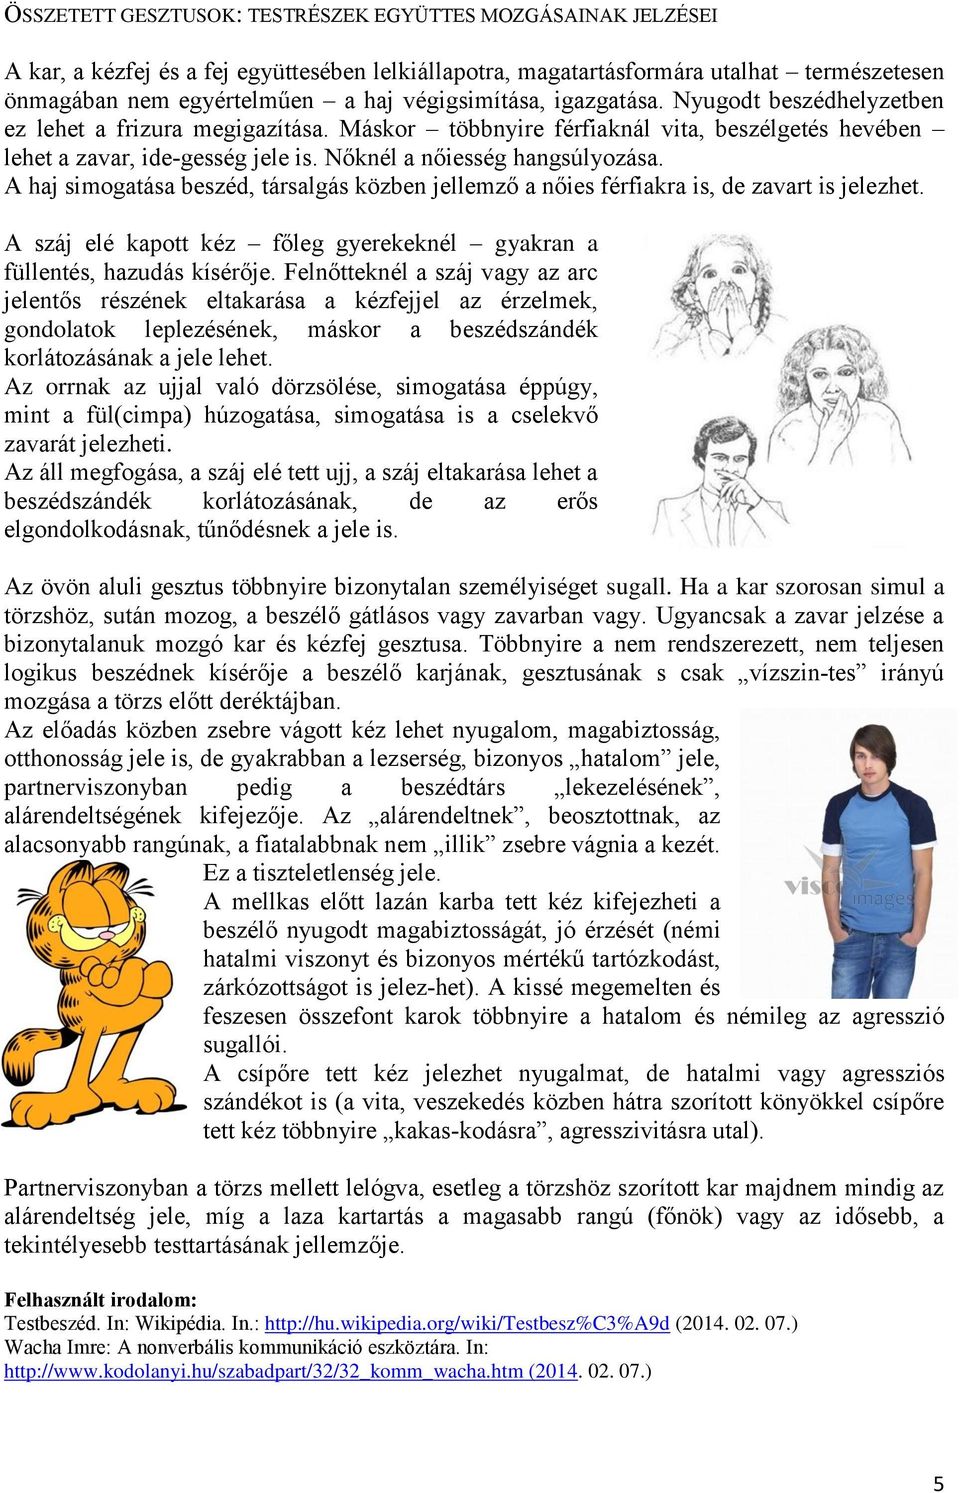 TESTBESZÉD ELEMEI 2. GESZTUSOK - PDF Free Download